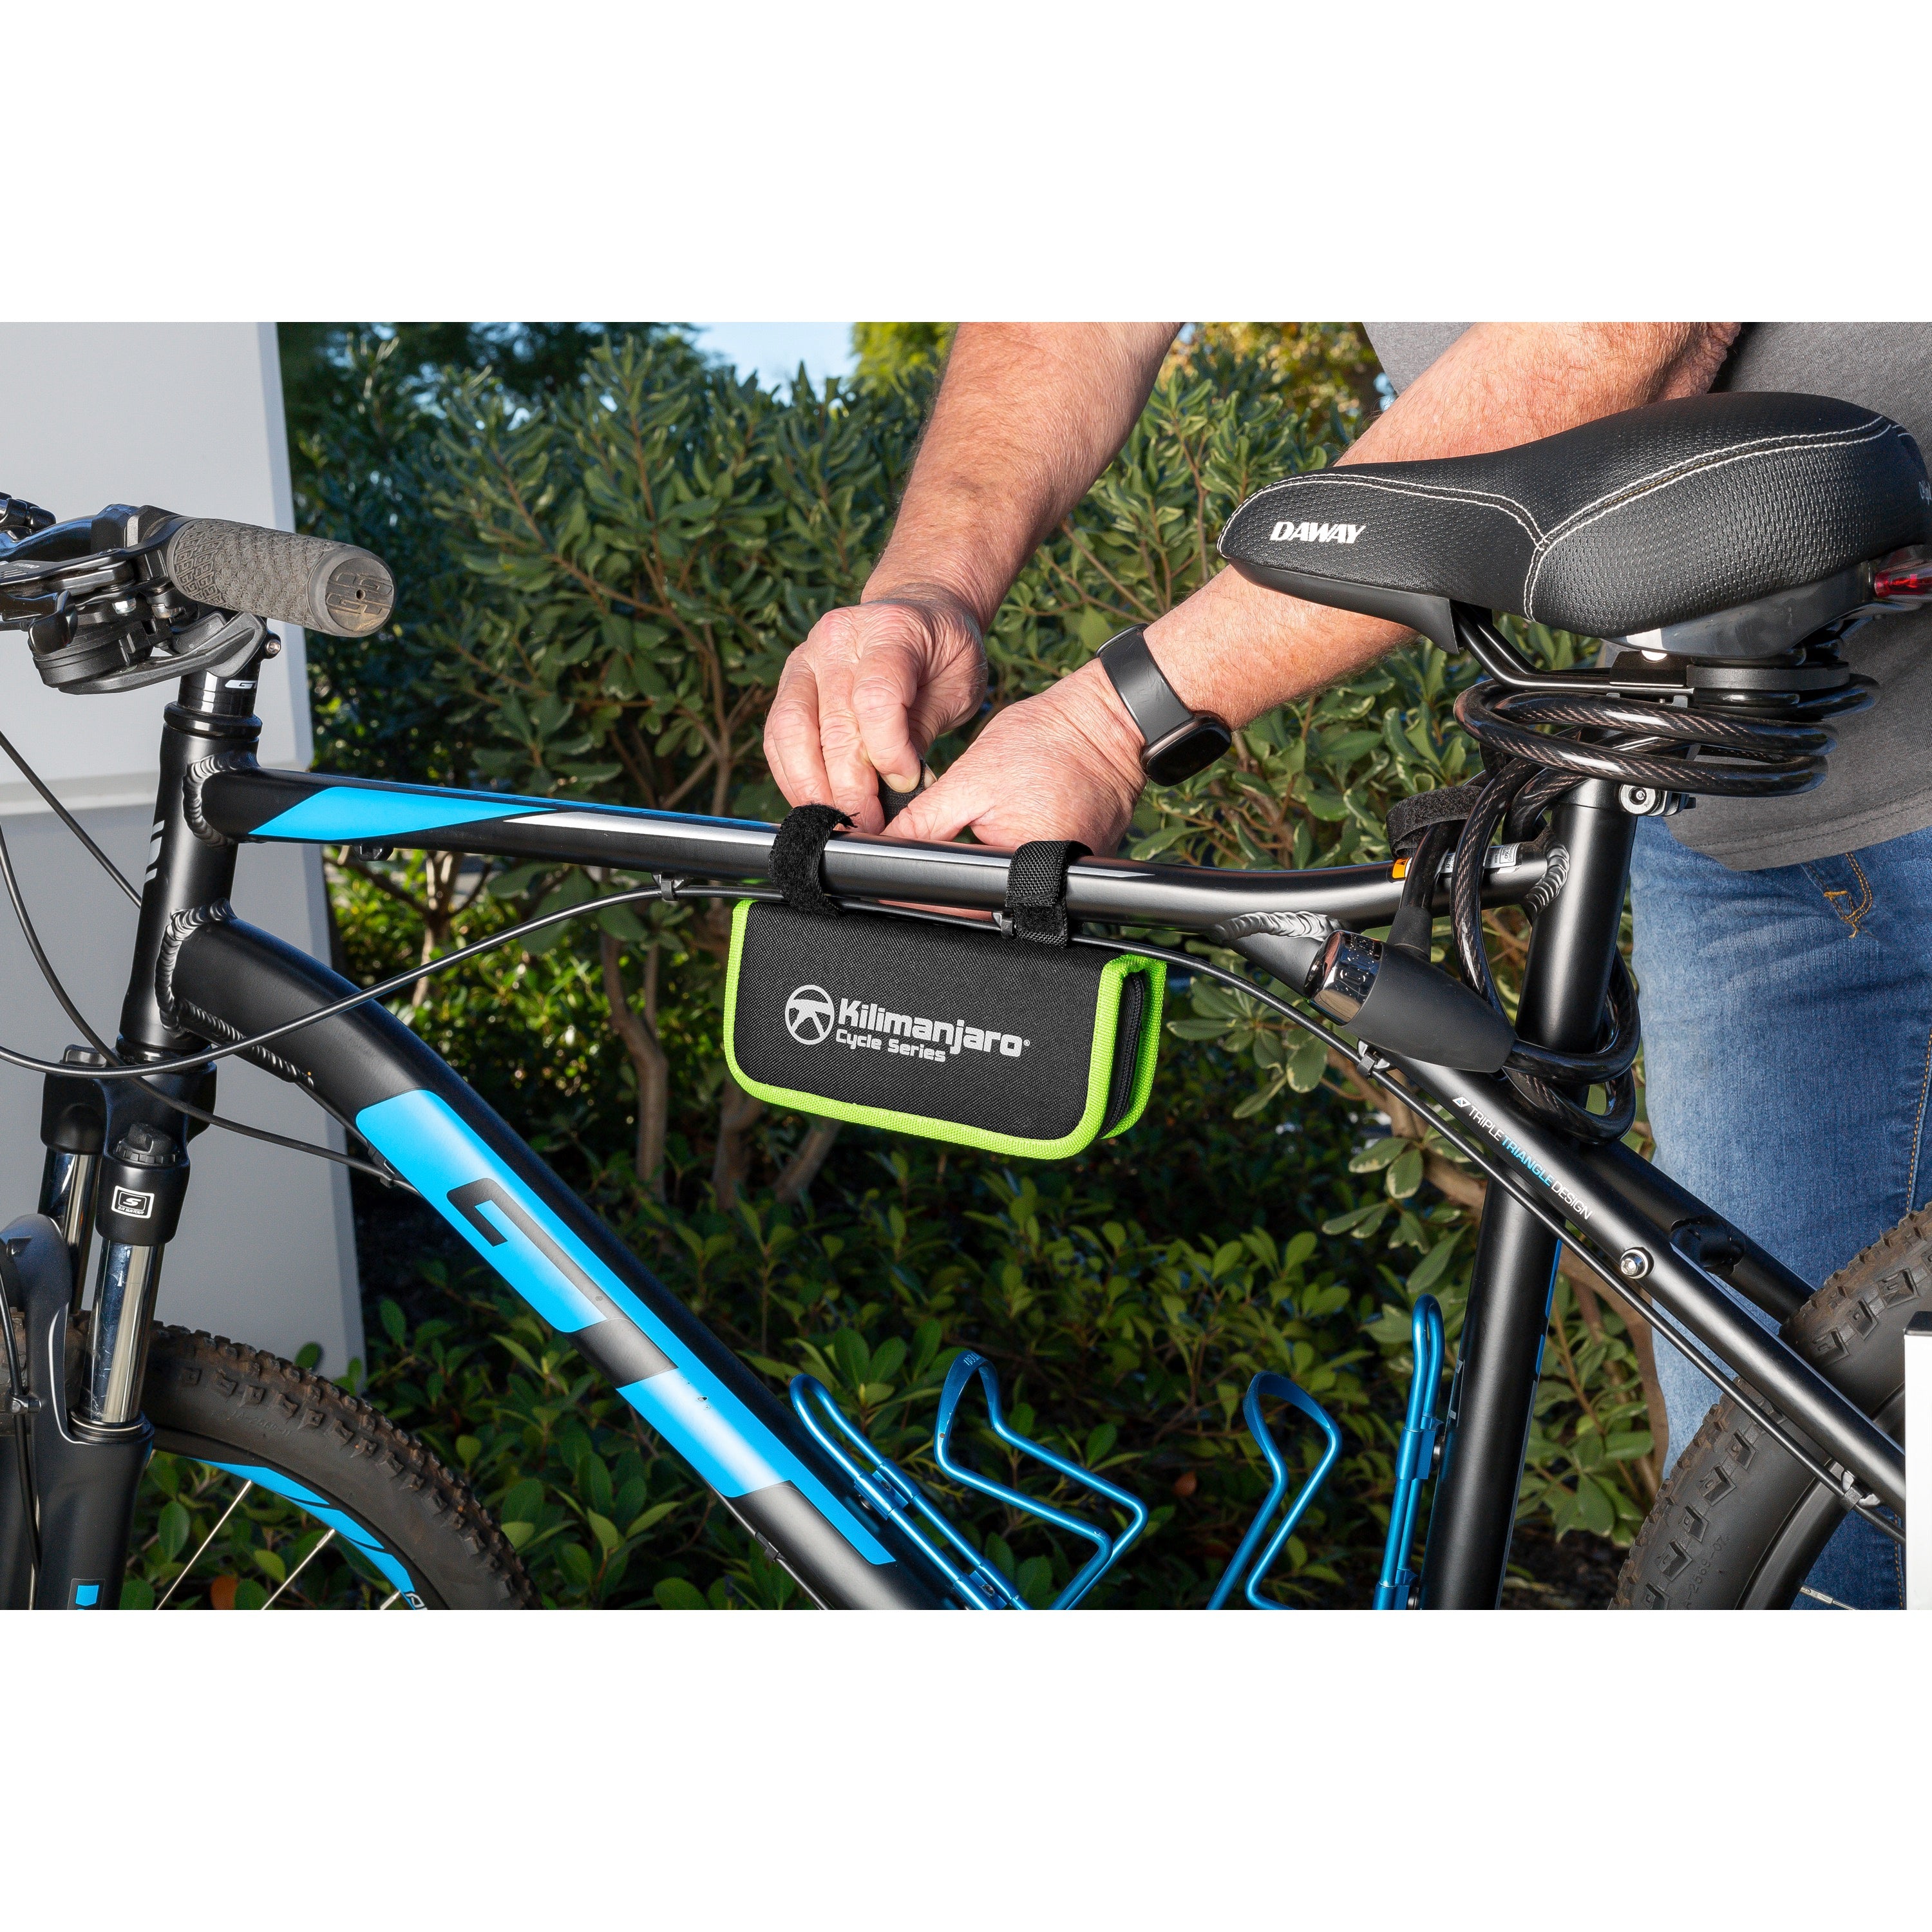 Kilimanjaro 40 Piece Bike Tool Repair Kit in Folding Case - 910549ECE